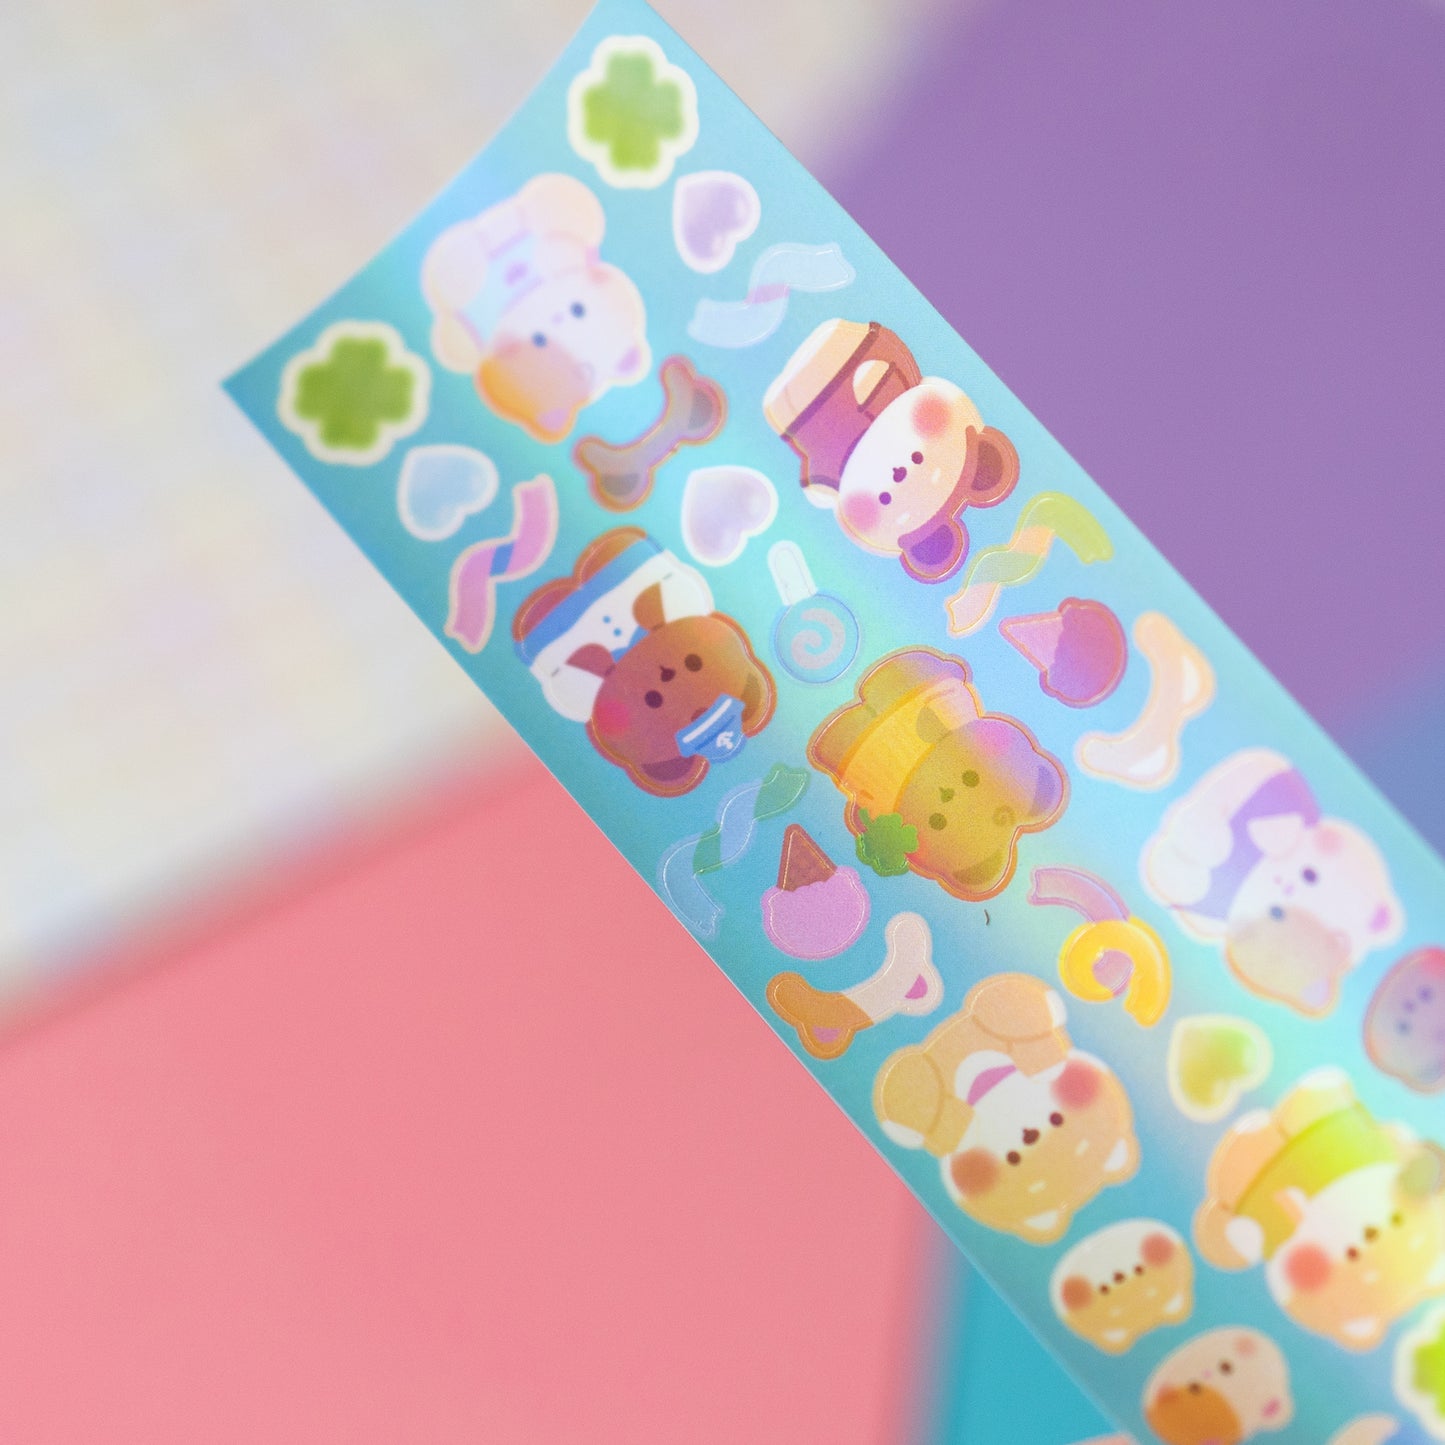 Lucky Minty Babies Soft Pastel Deco Journal Sticker Sheet